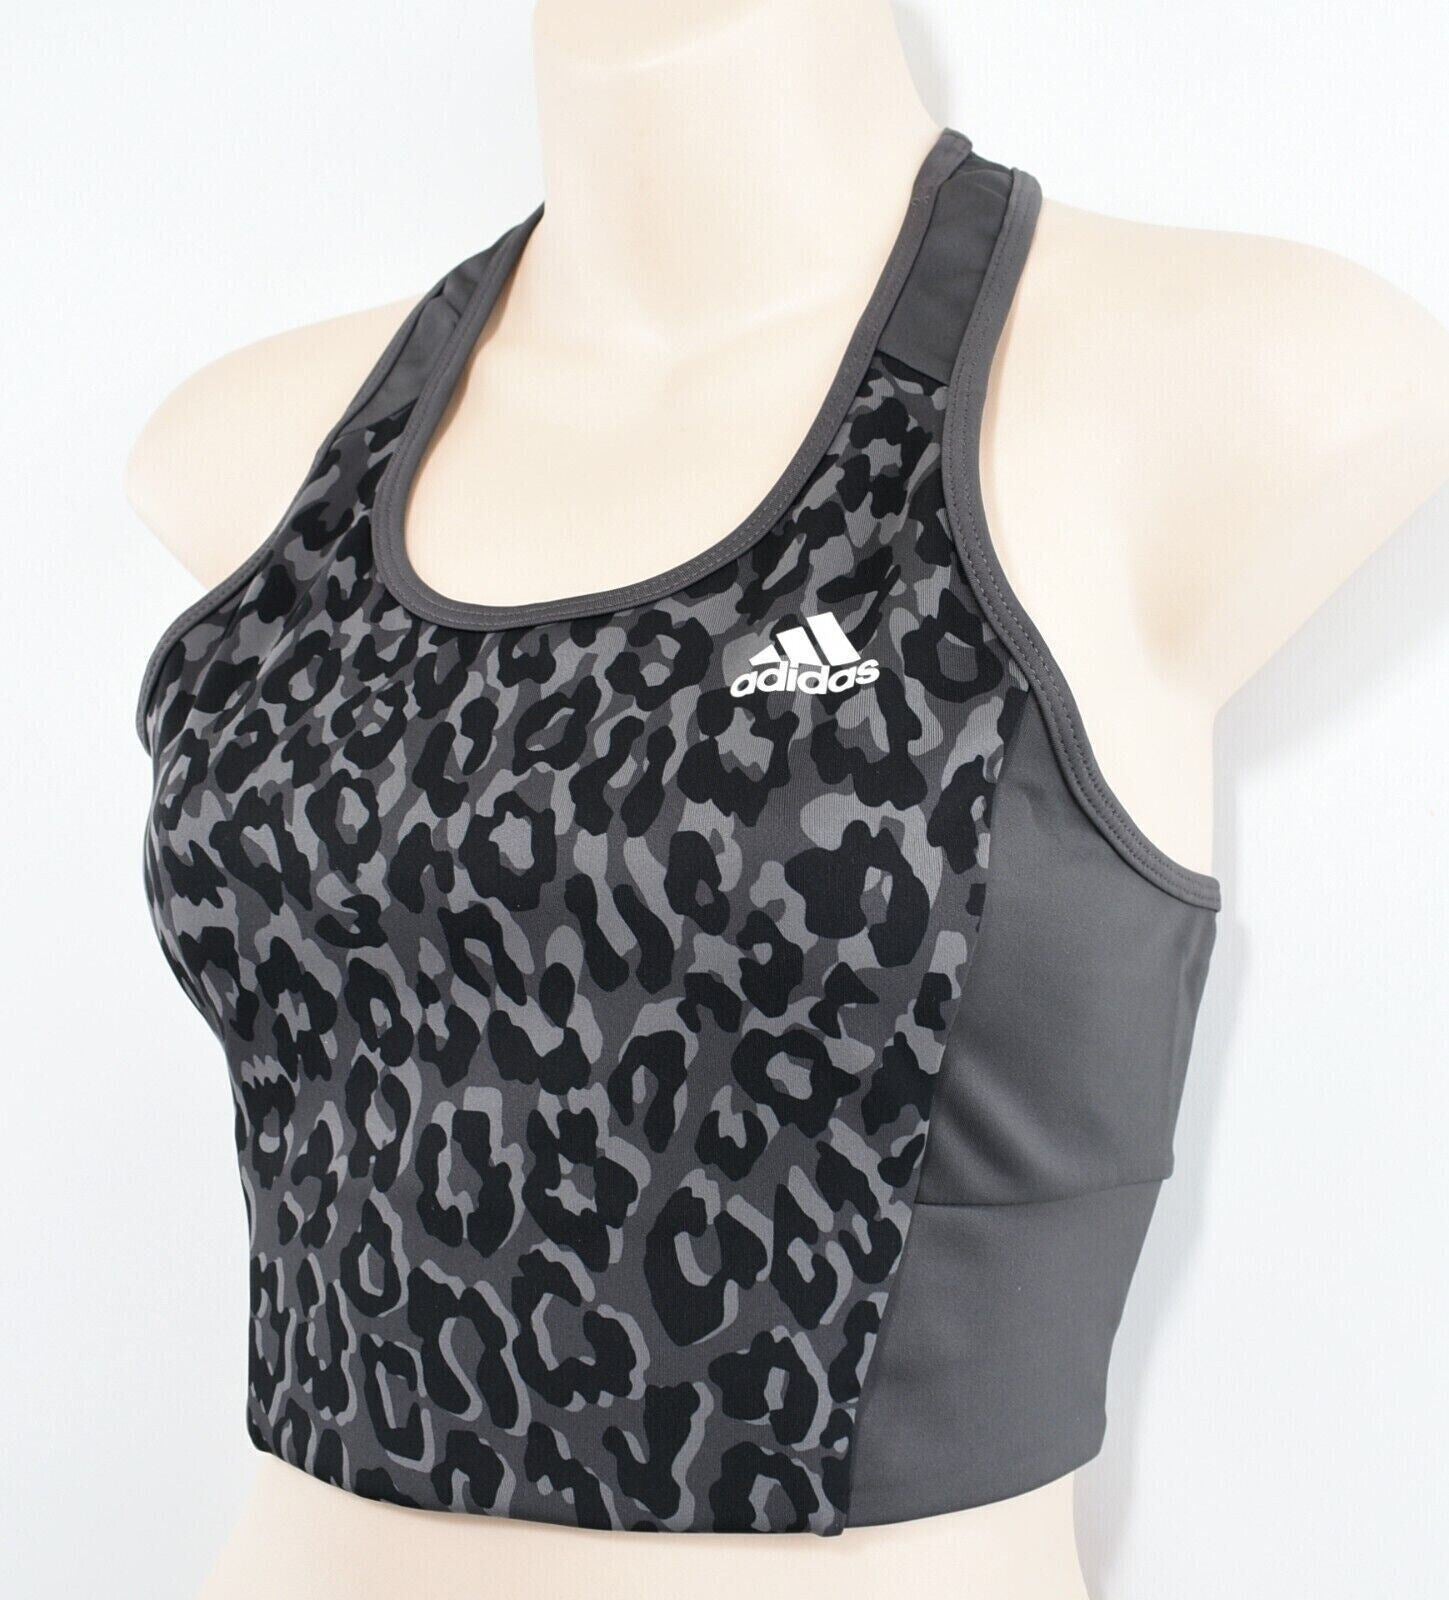 ADIDAS Womens Workout Gym Bra Top, Black/Grey Leopard Print, size M /UK 12-14